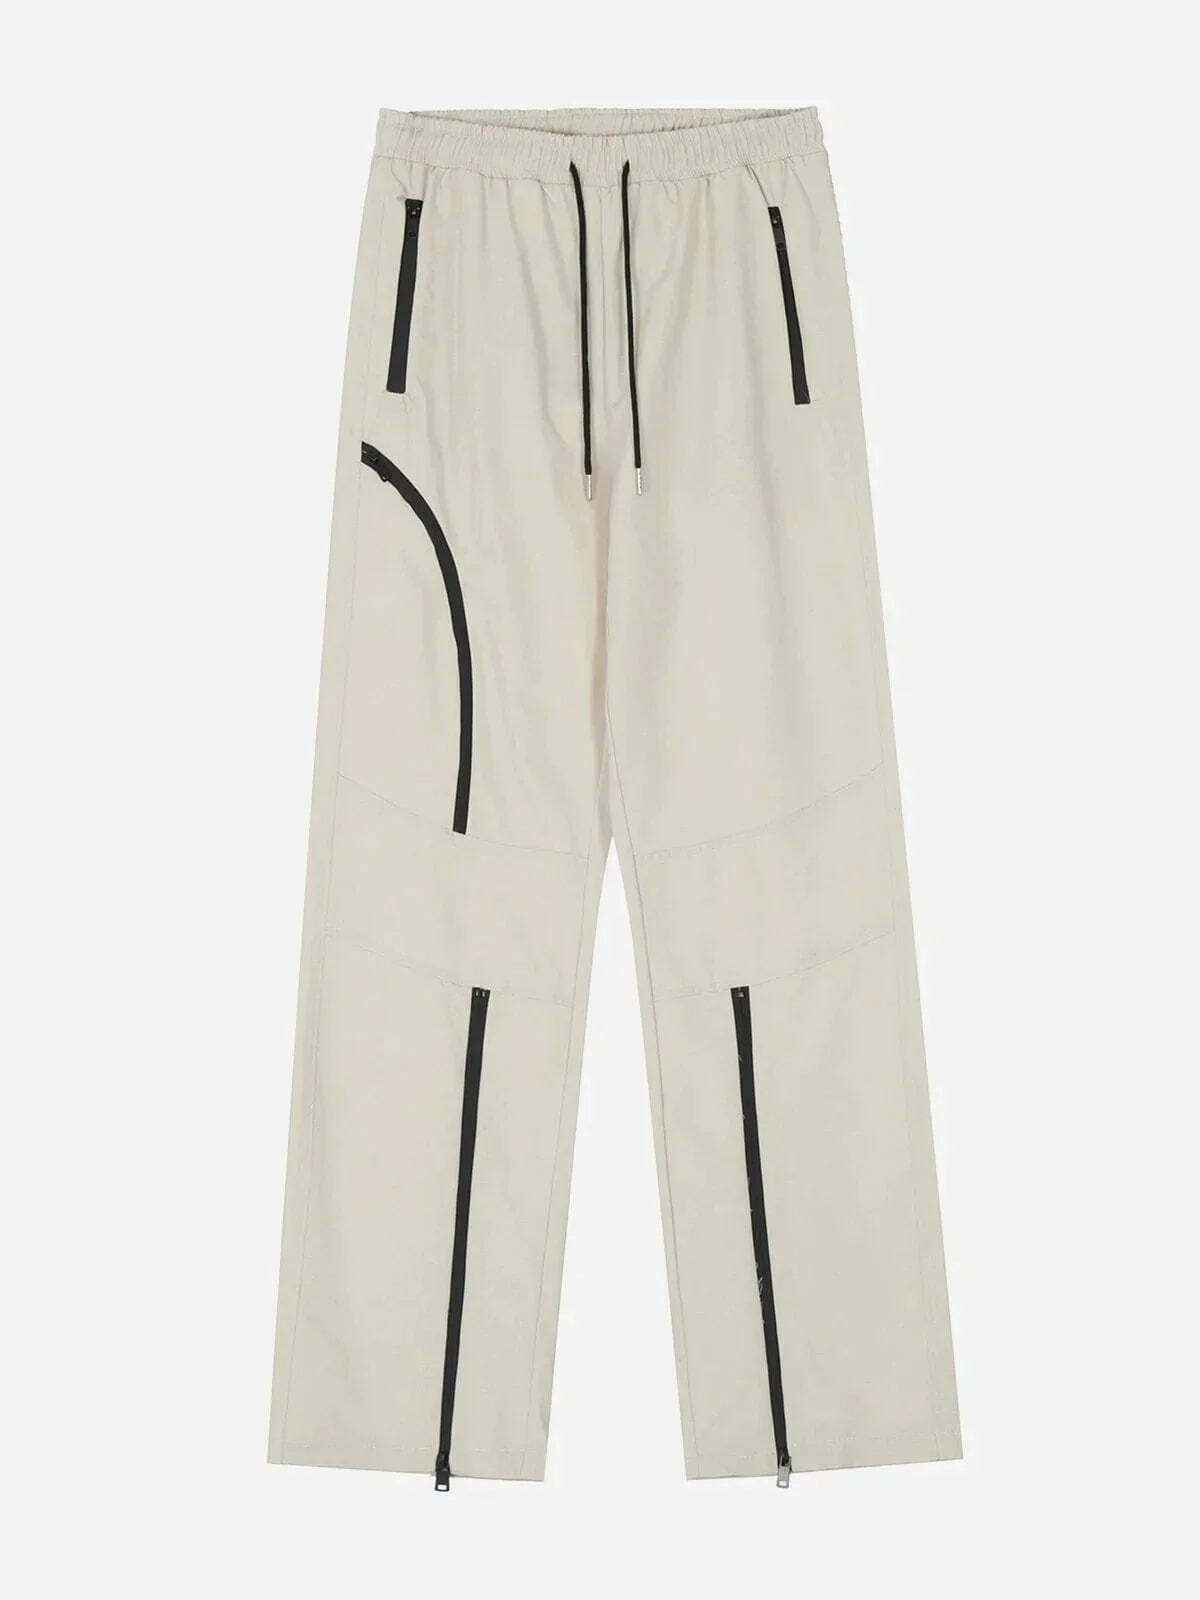 revolutionary splicing zip pants edgy & urban streetwear 2587